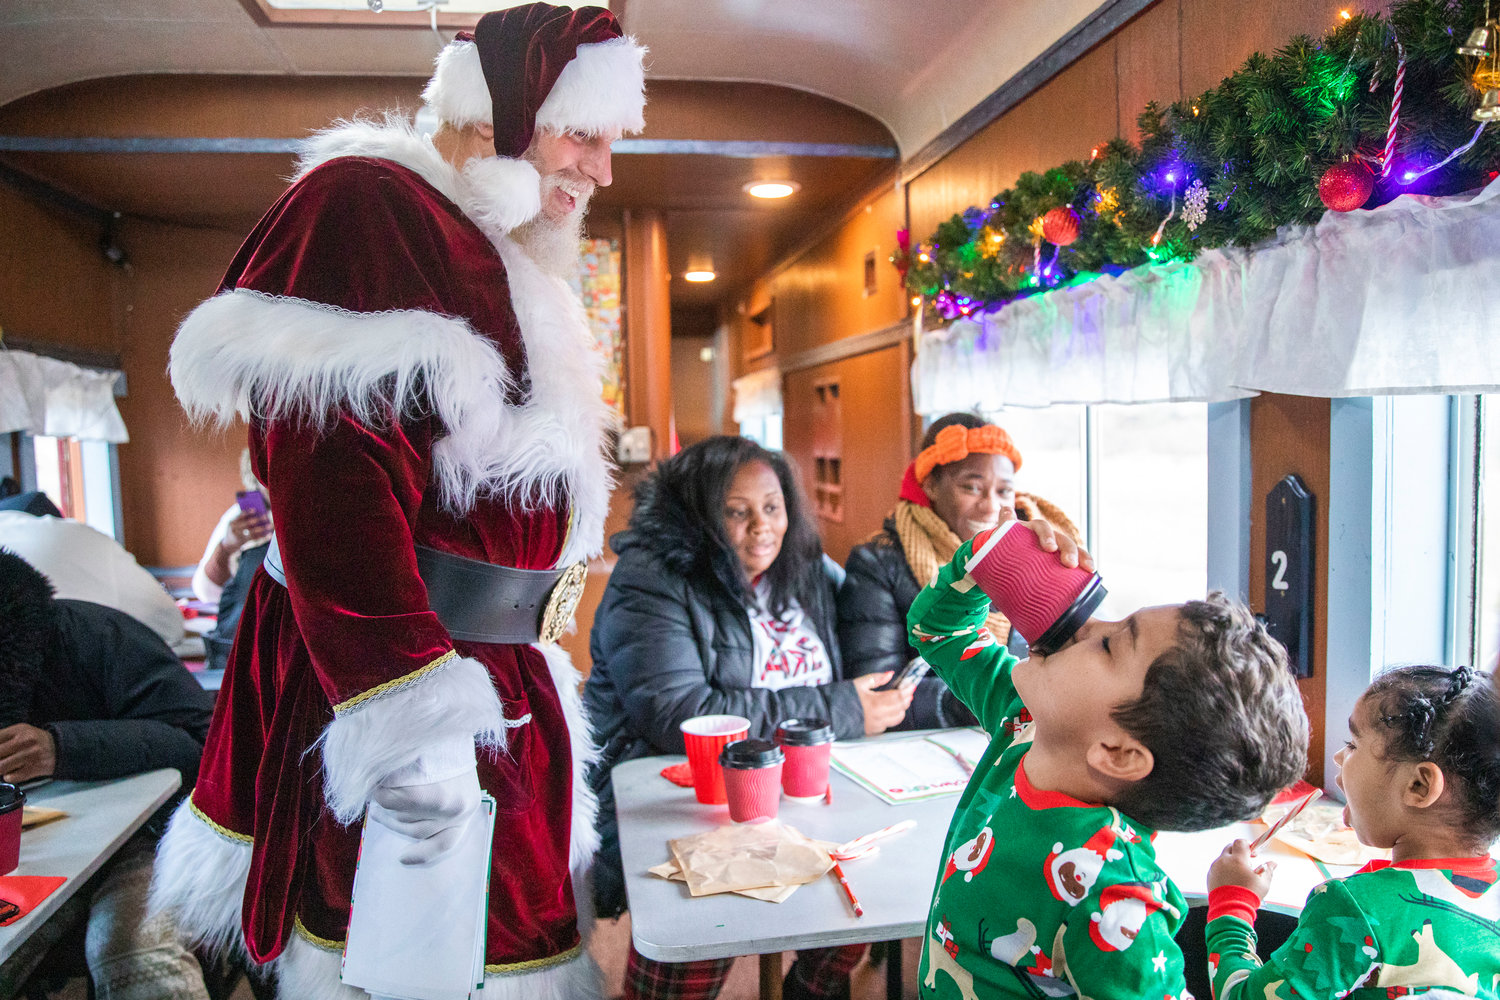 Santa laughs while visiting kids at the Steam Train Depot in Chehalis on Saturday.